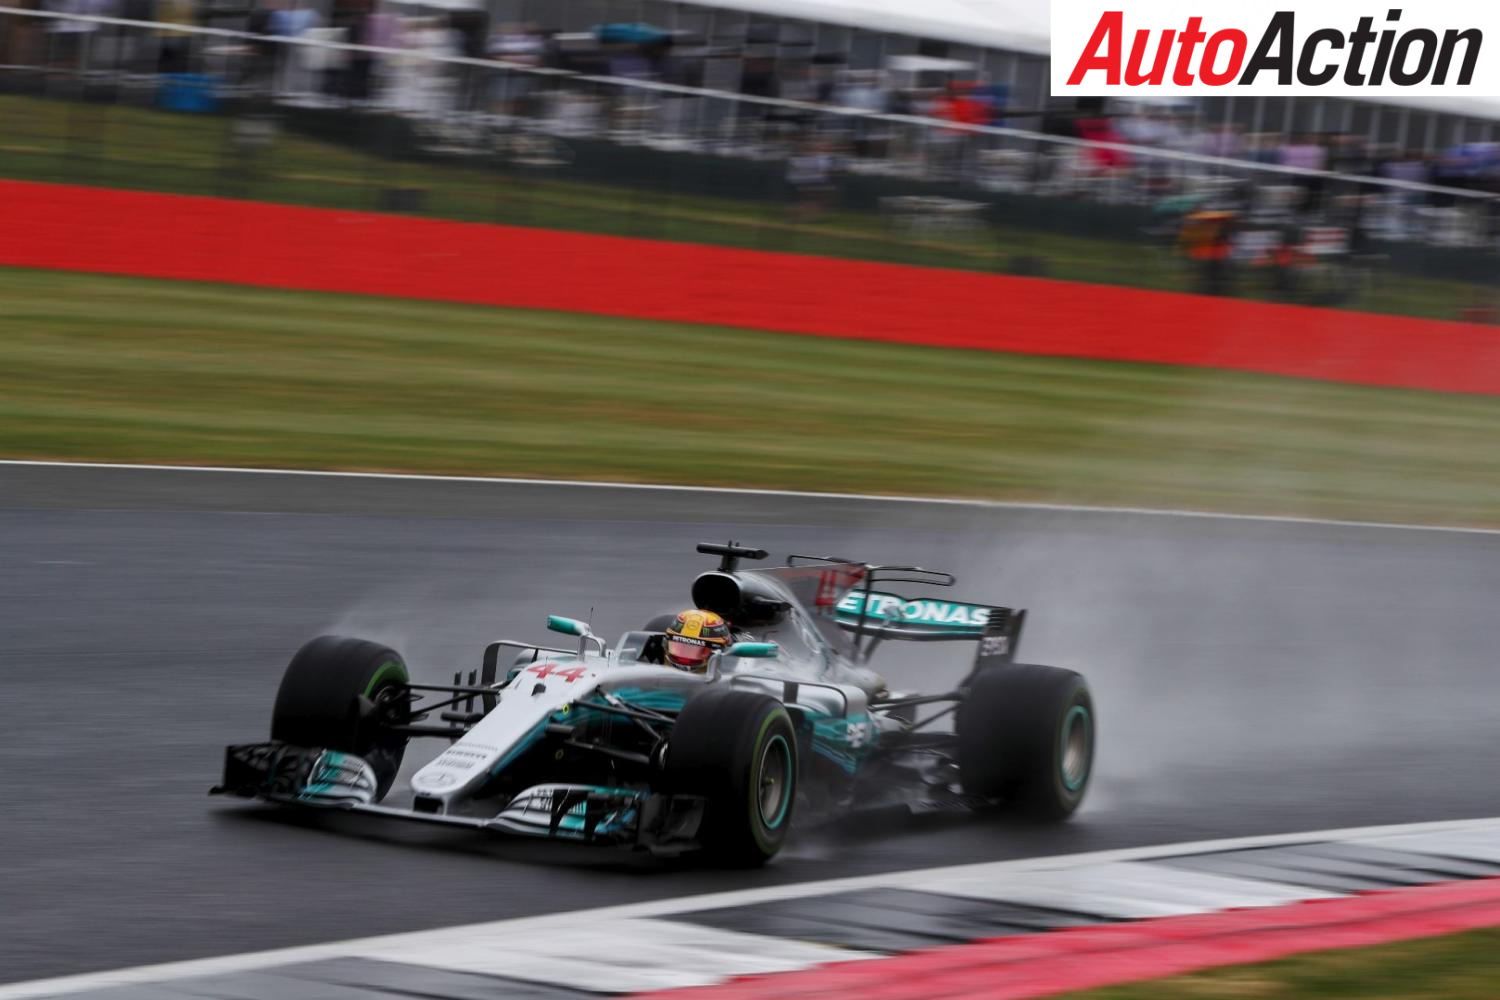 Lewis Hamilton fastest in qualifying for the British Grand Prix - Photo: LAT